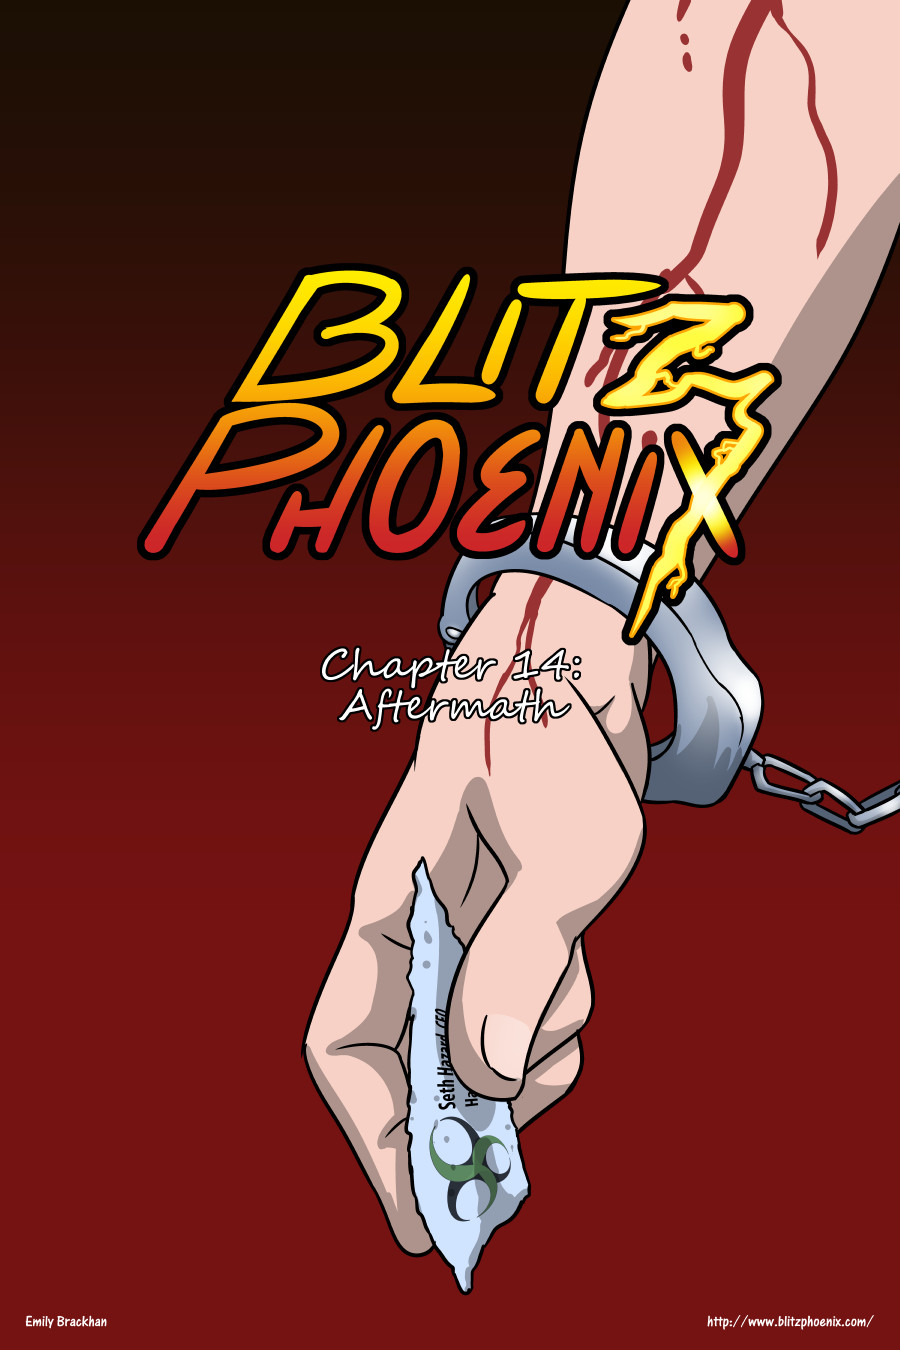 Blitz Phoenix - Chapter 14, Page 1